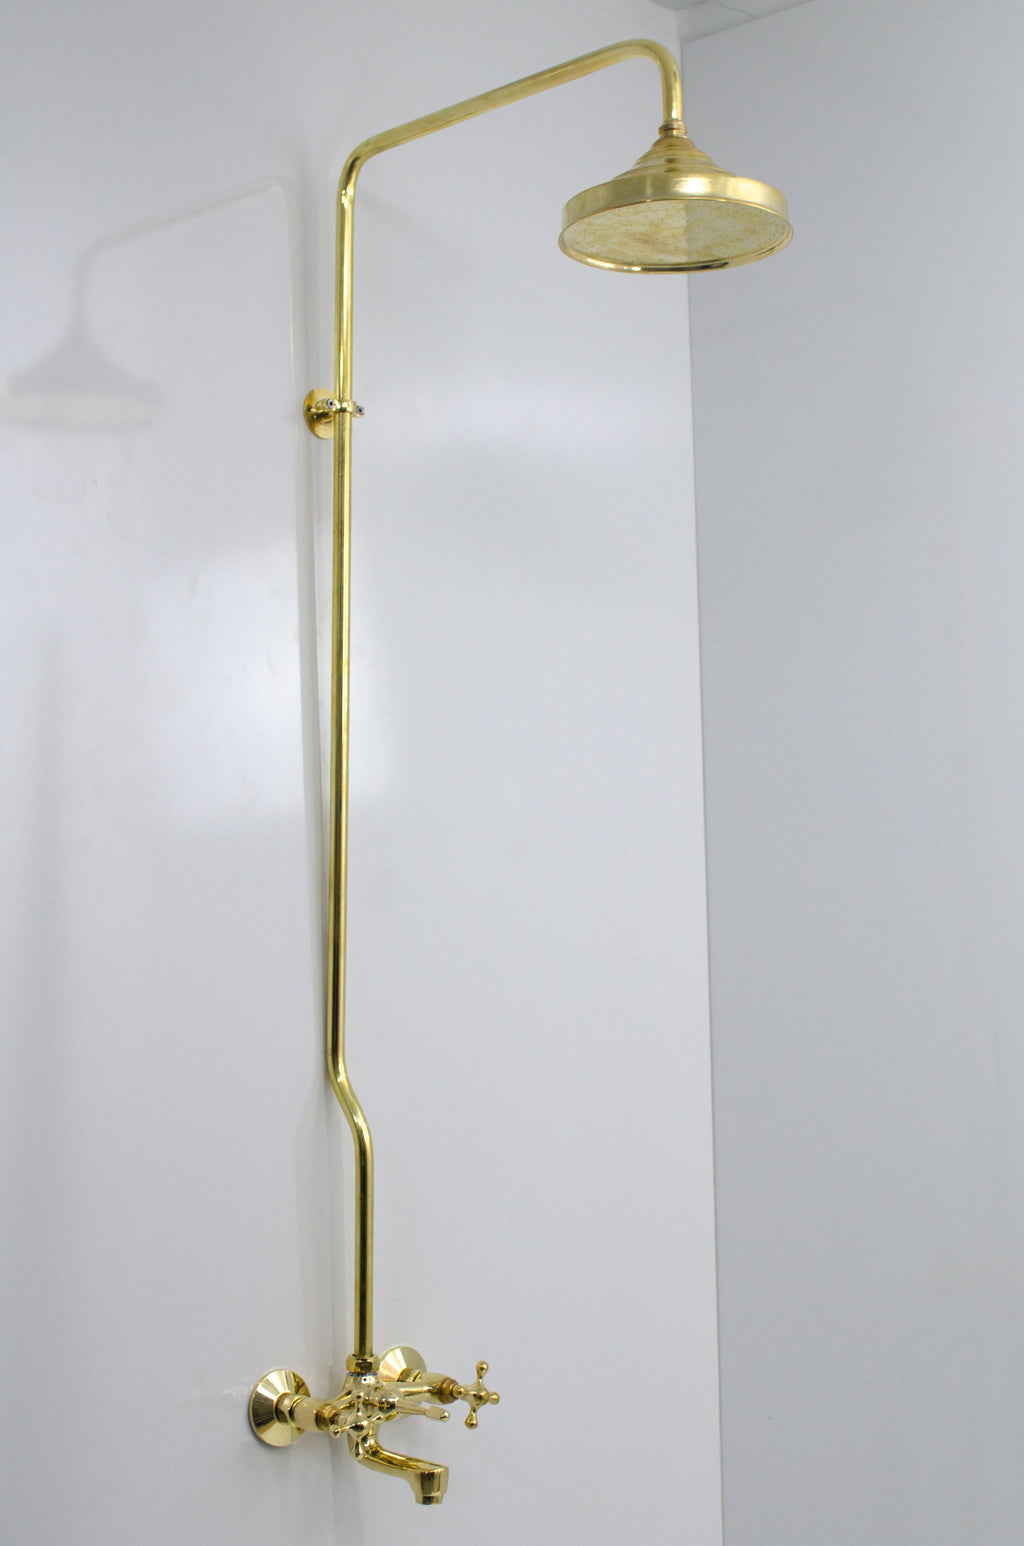 brass shower systems